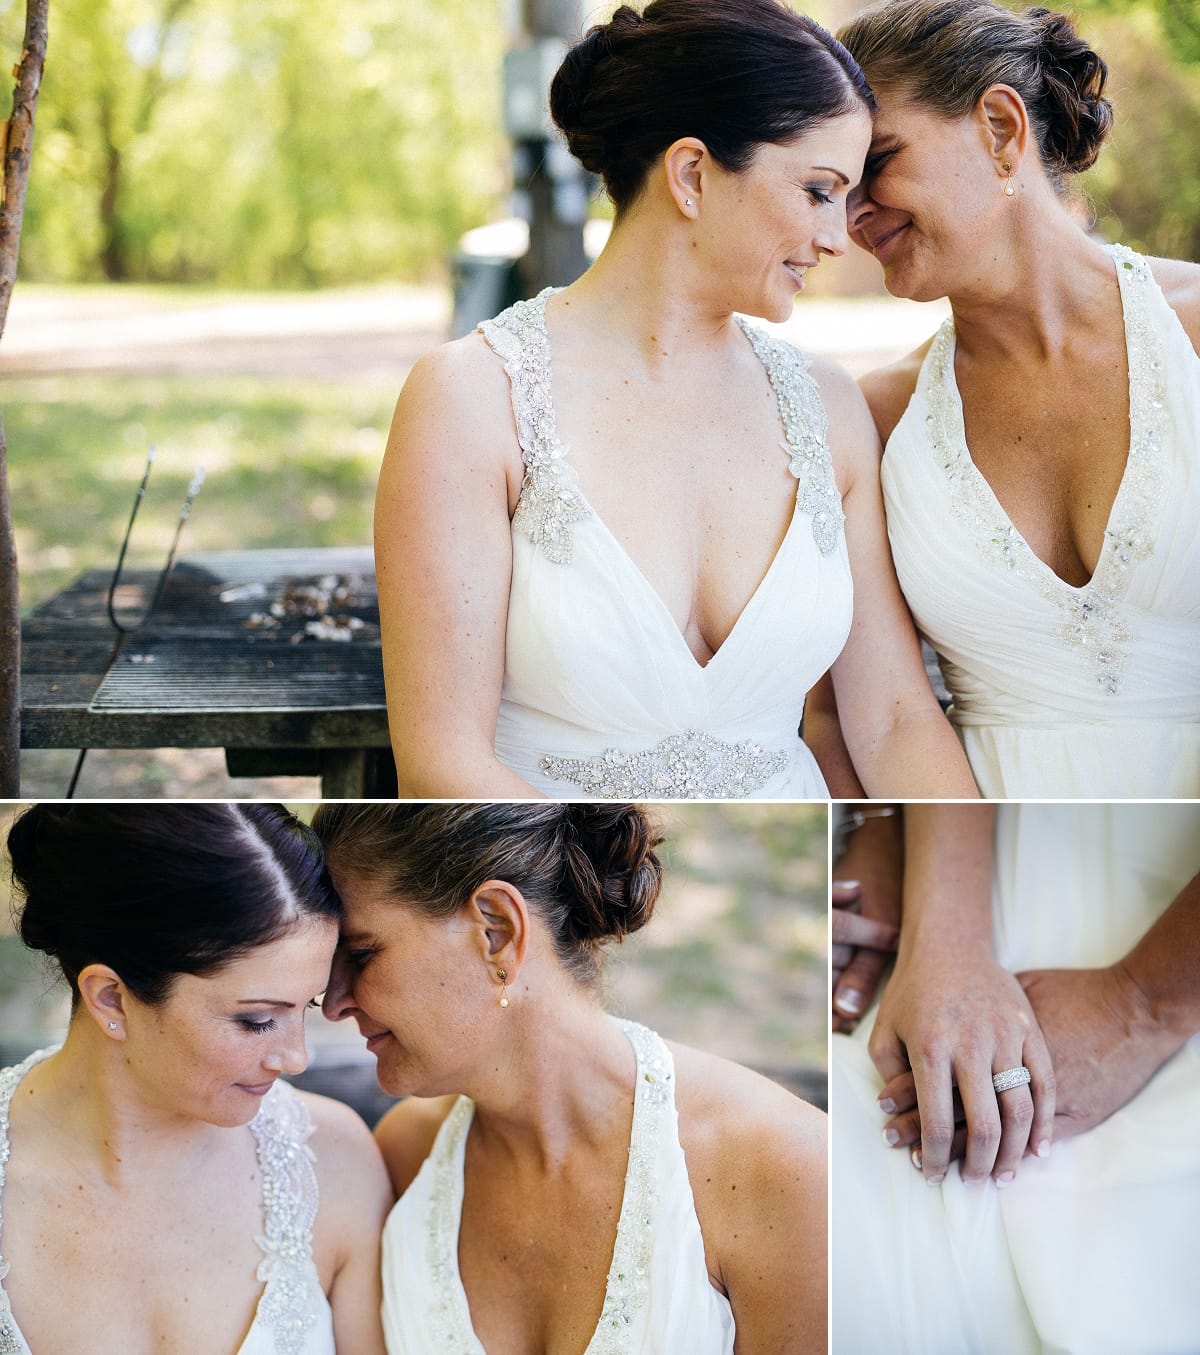 Beth and Gina Shakopee Wedding Photography 7